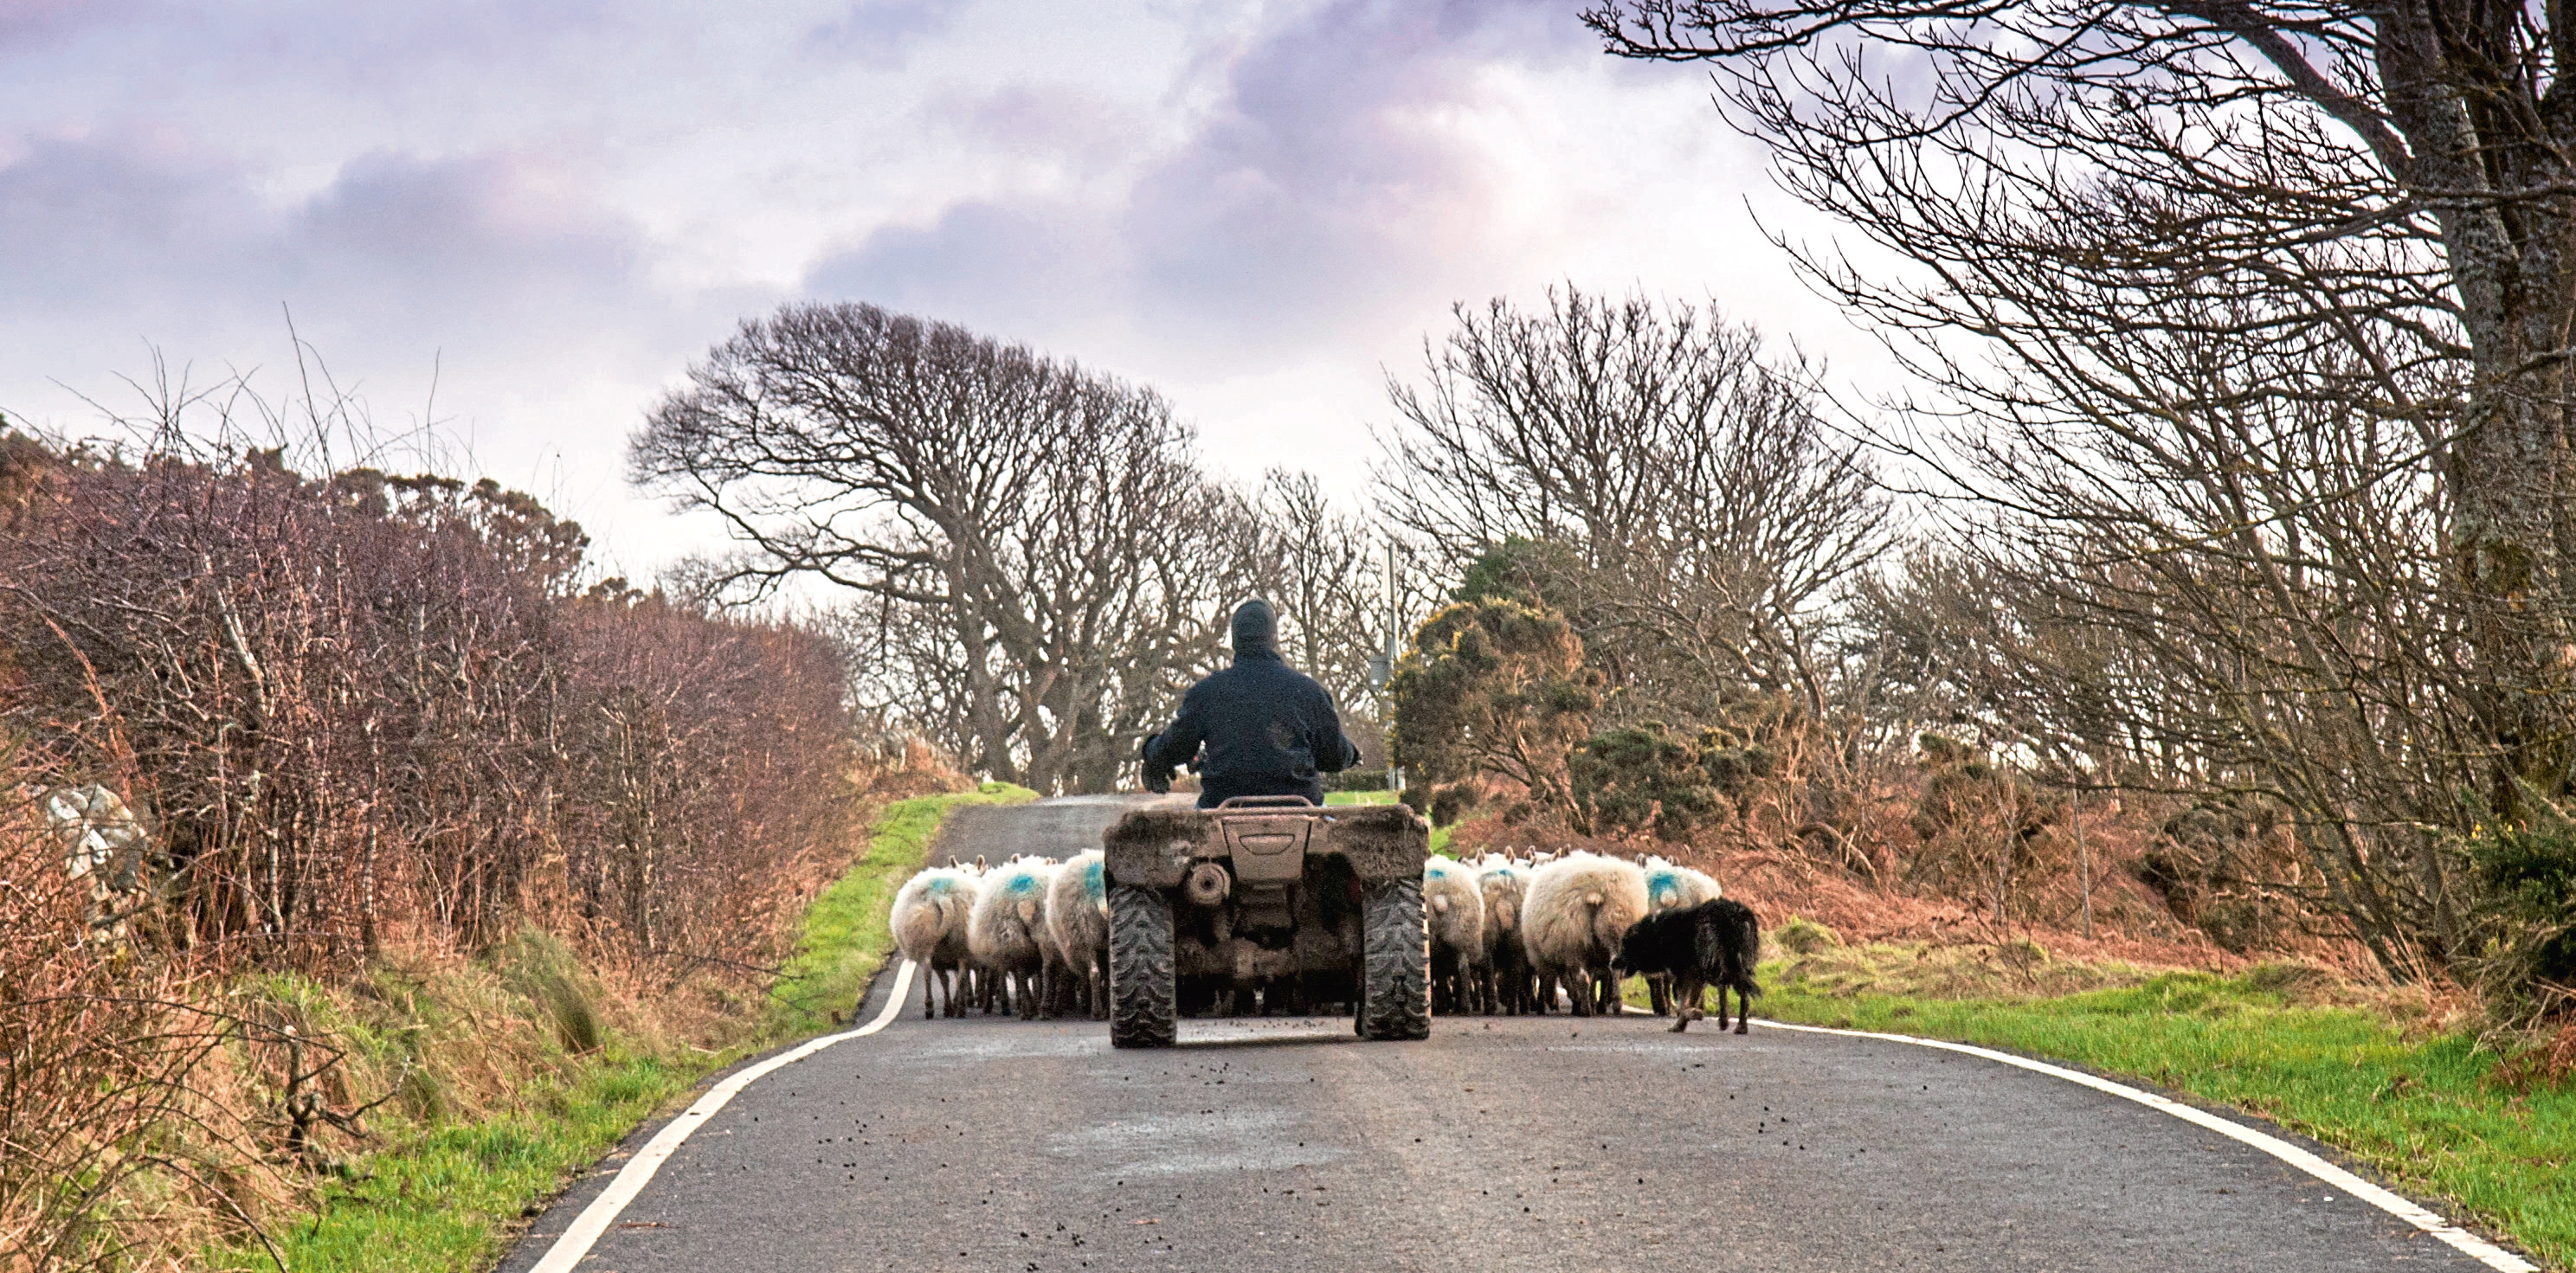 A report raises fears that a no-deal Brexit would render the majority of farm businesses unviable.